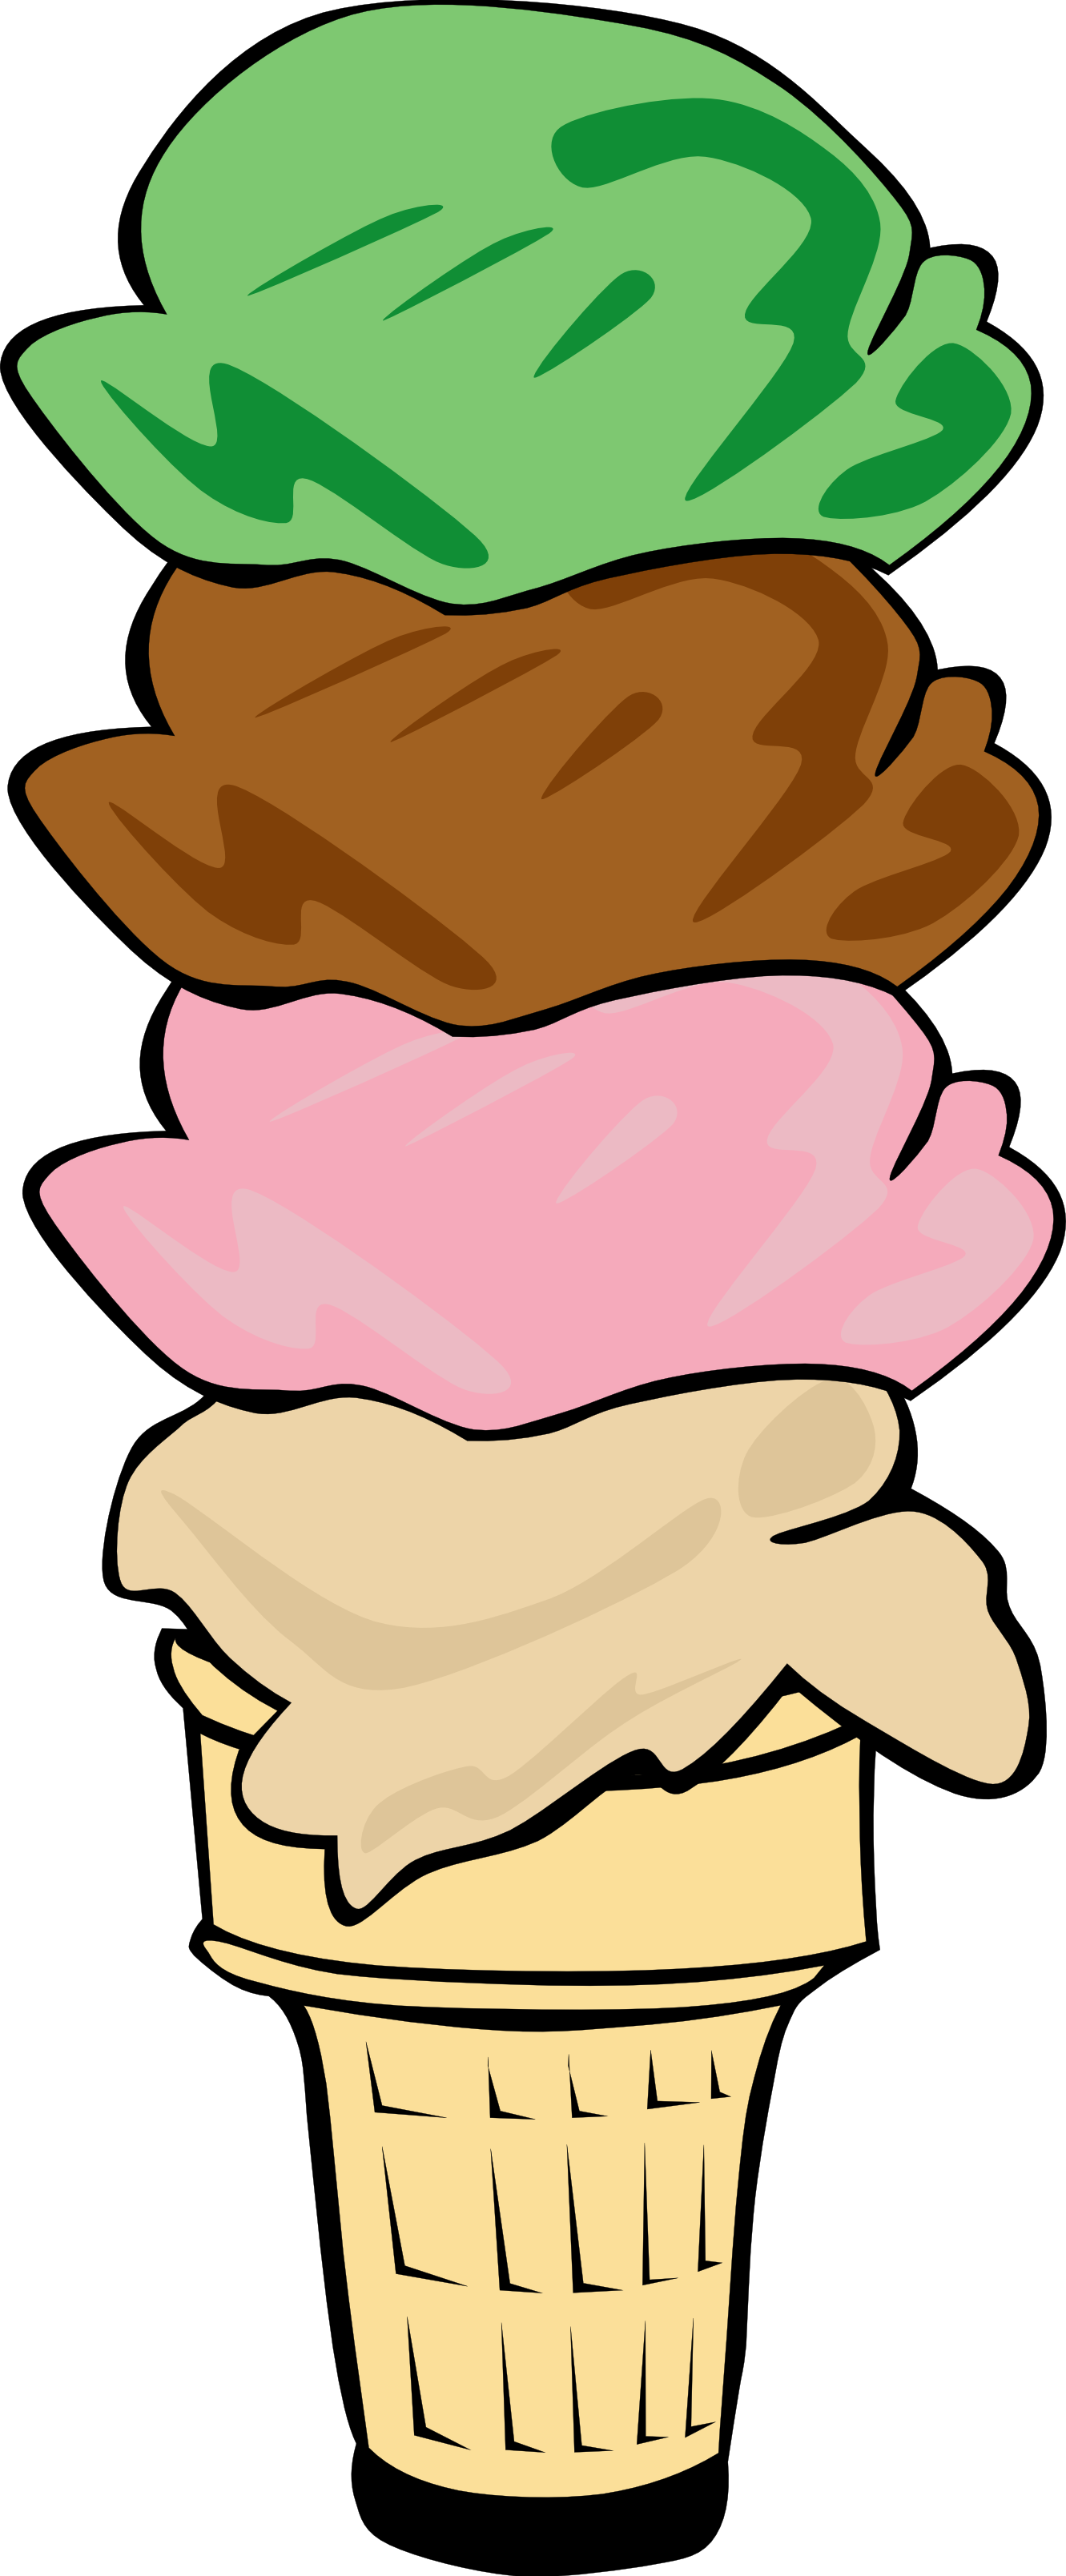 clipart of ice cream cone - photo #45